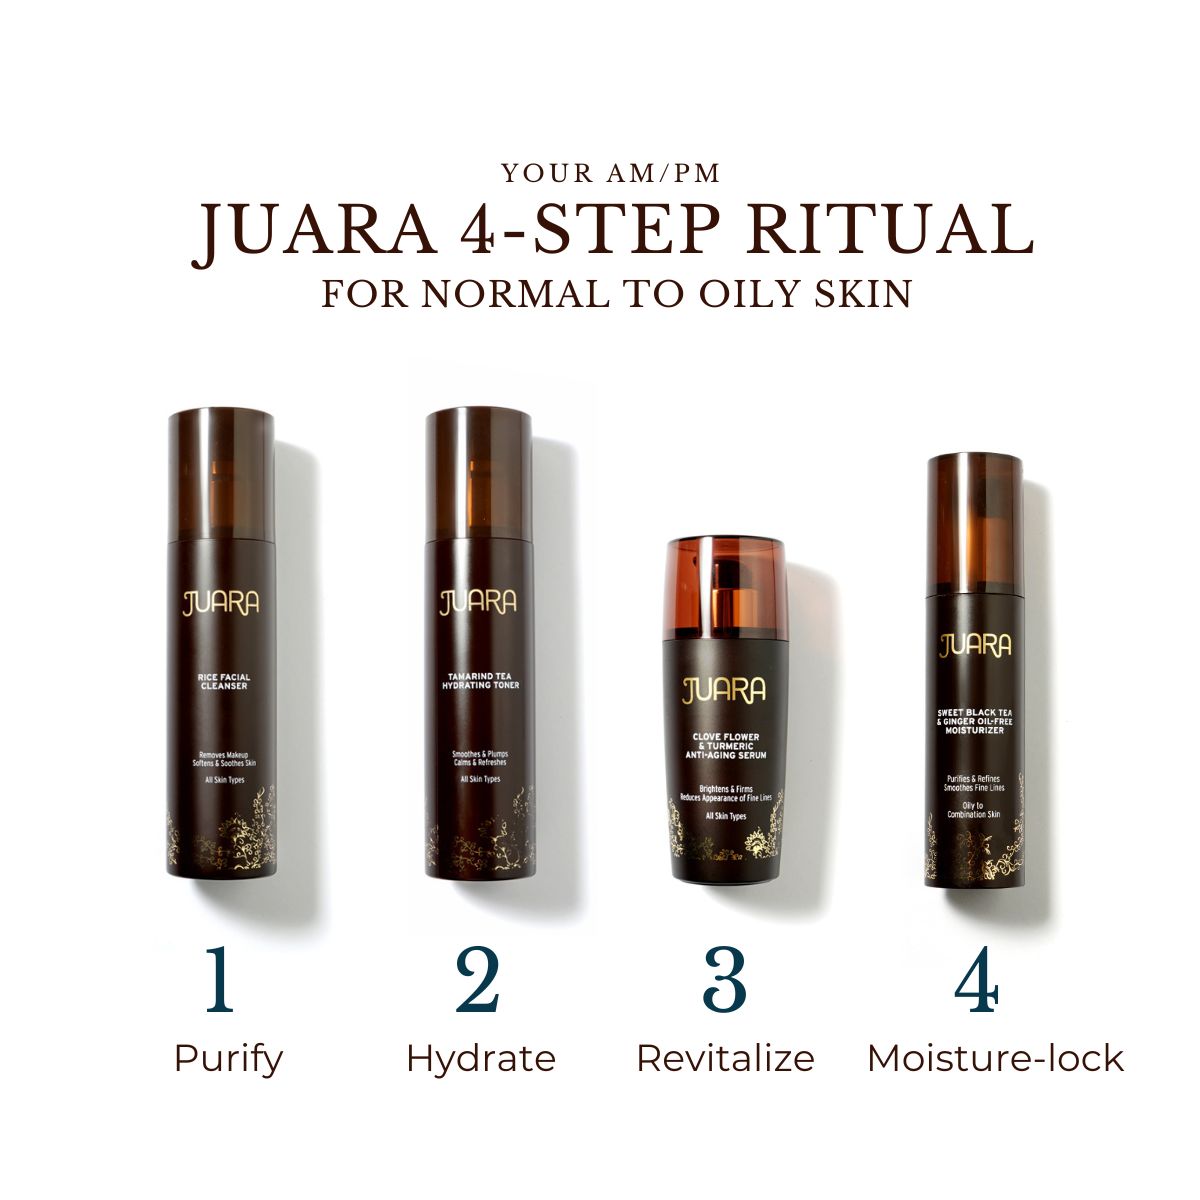 The JUARA Face Ritual for Oily to Combination Skin from JUARA Skincare